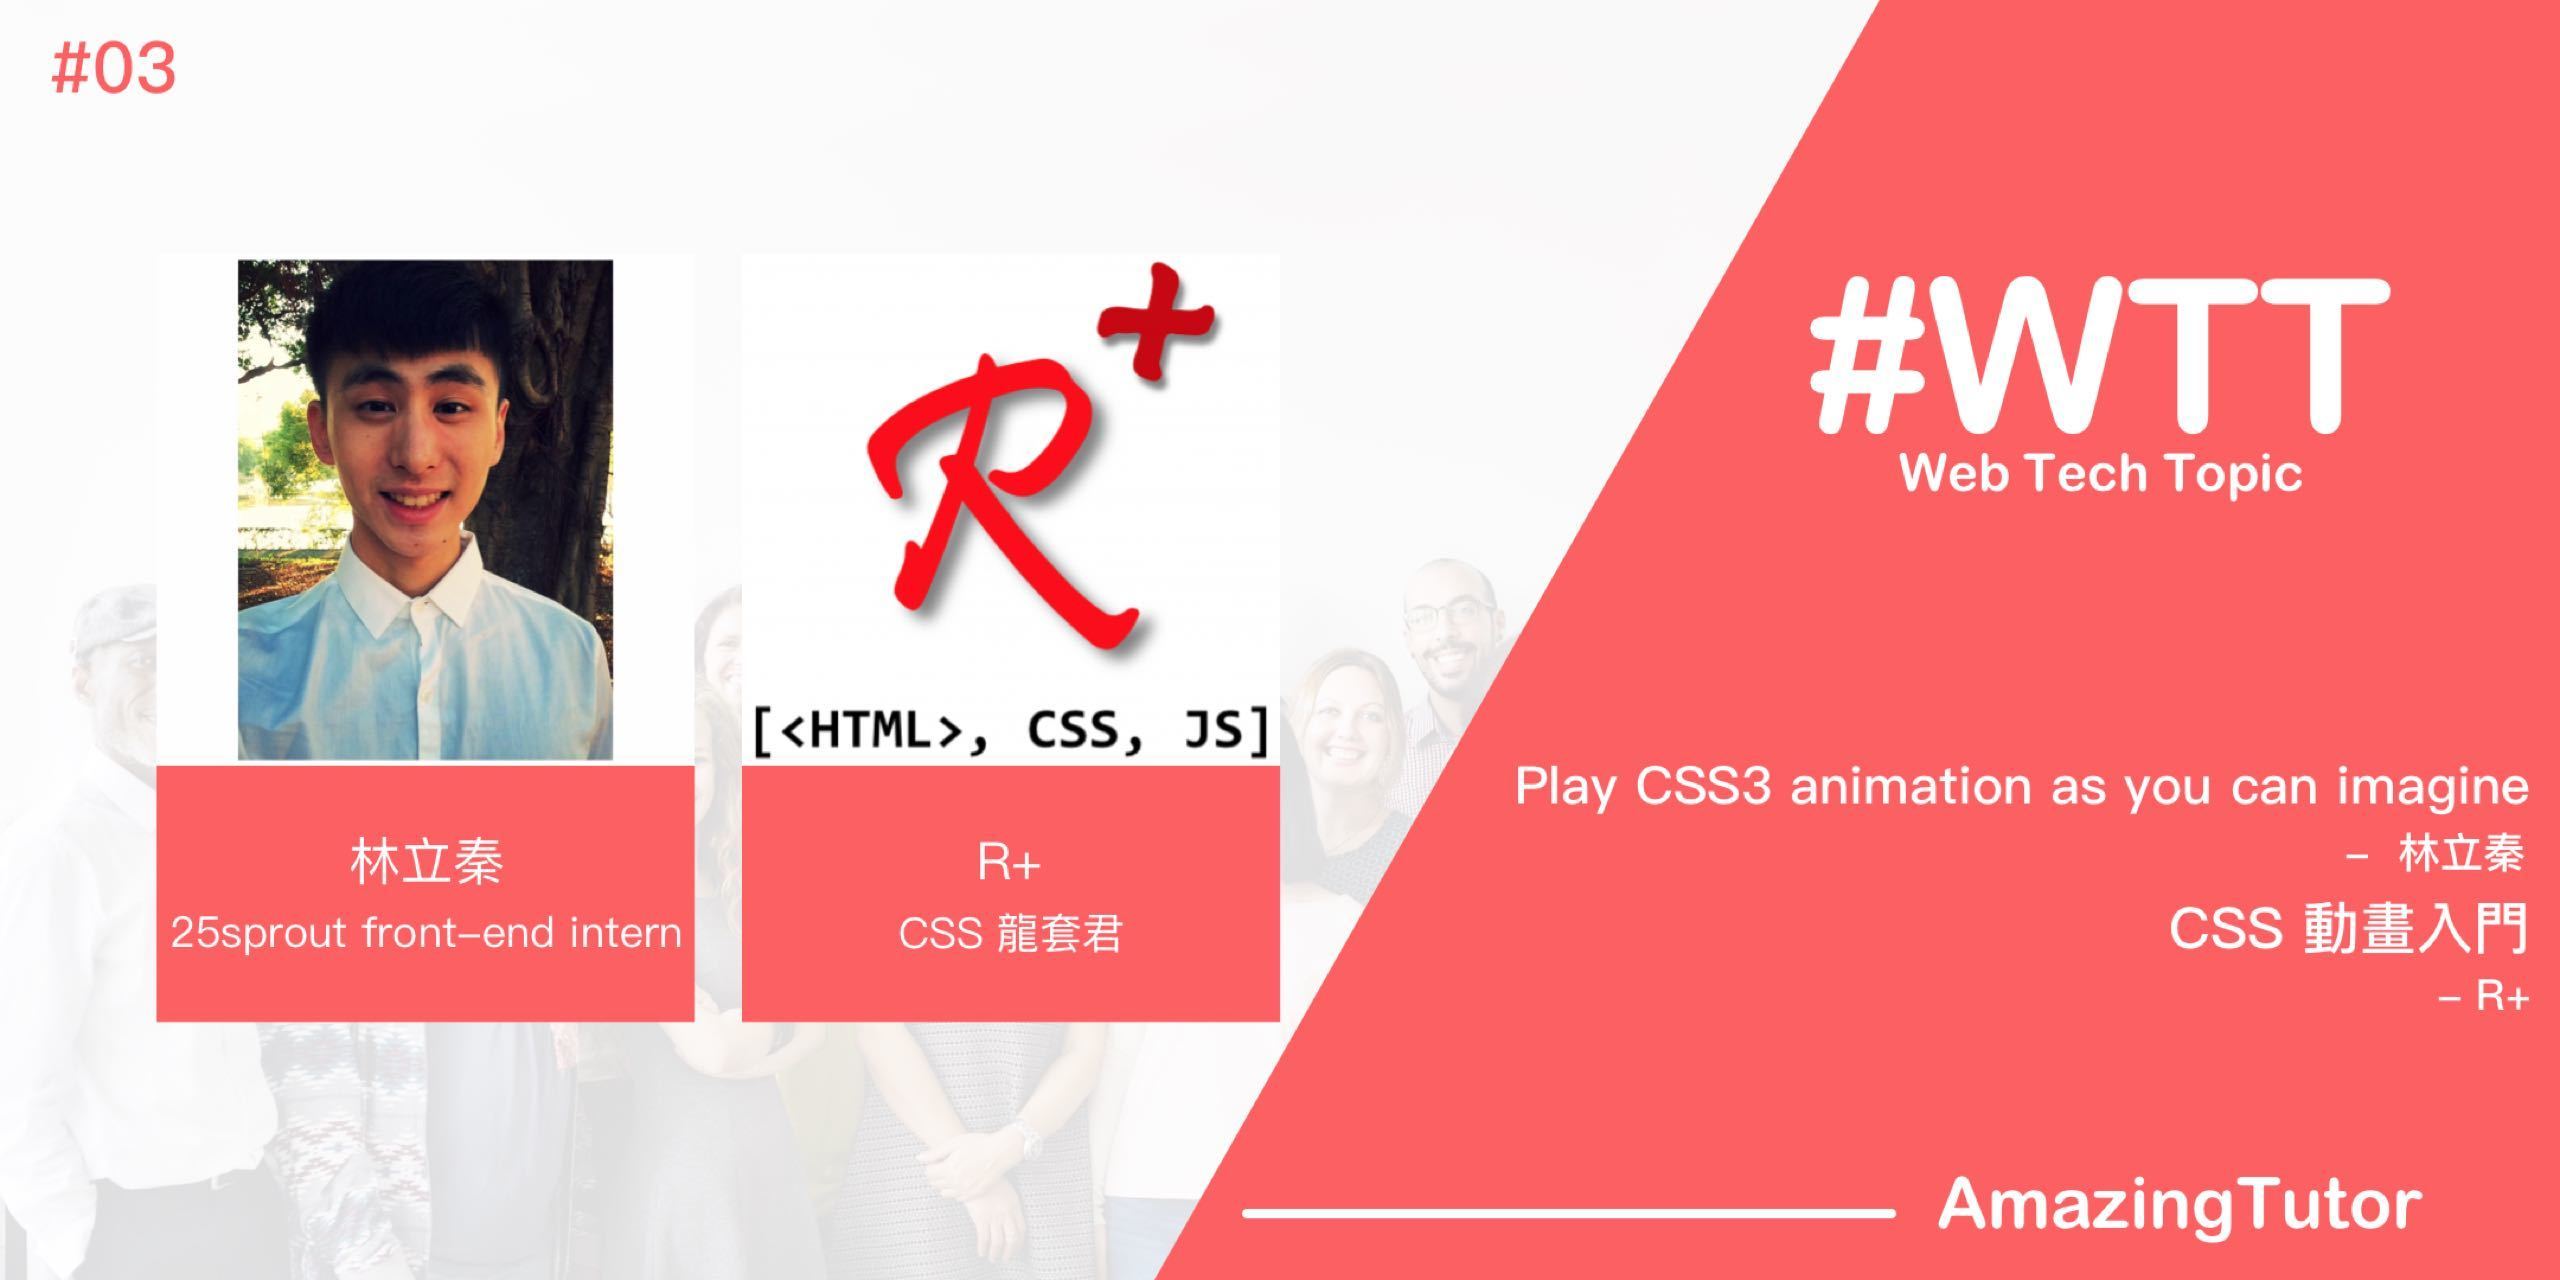 Web Tech Topic #3 - Play CSS3 Animation!!